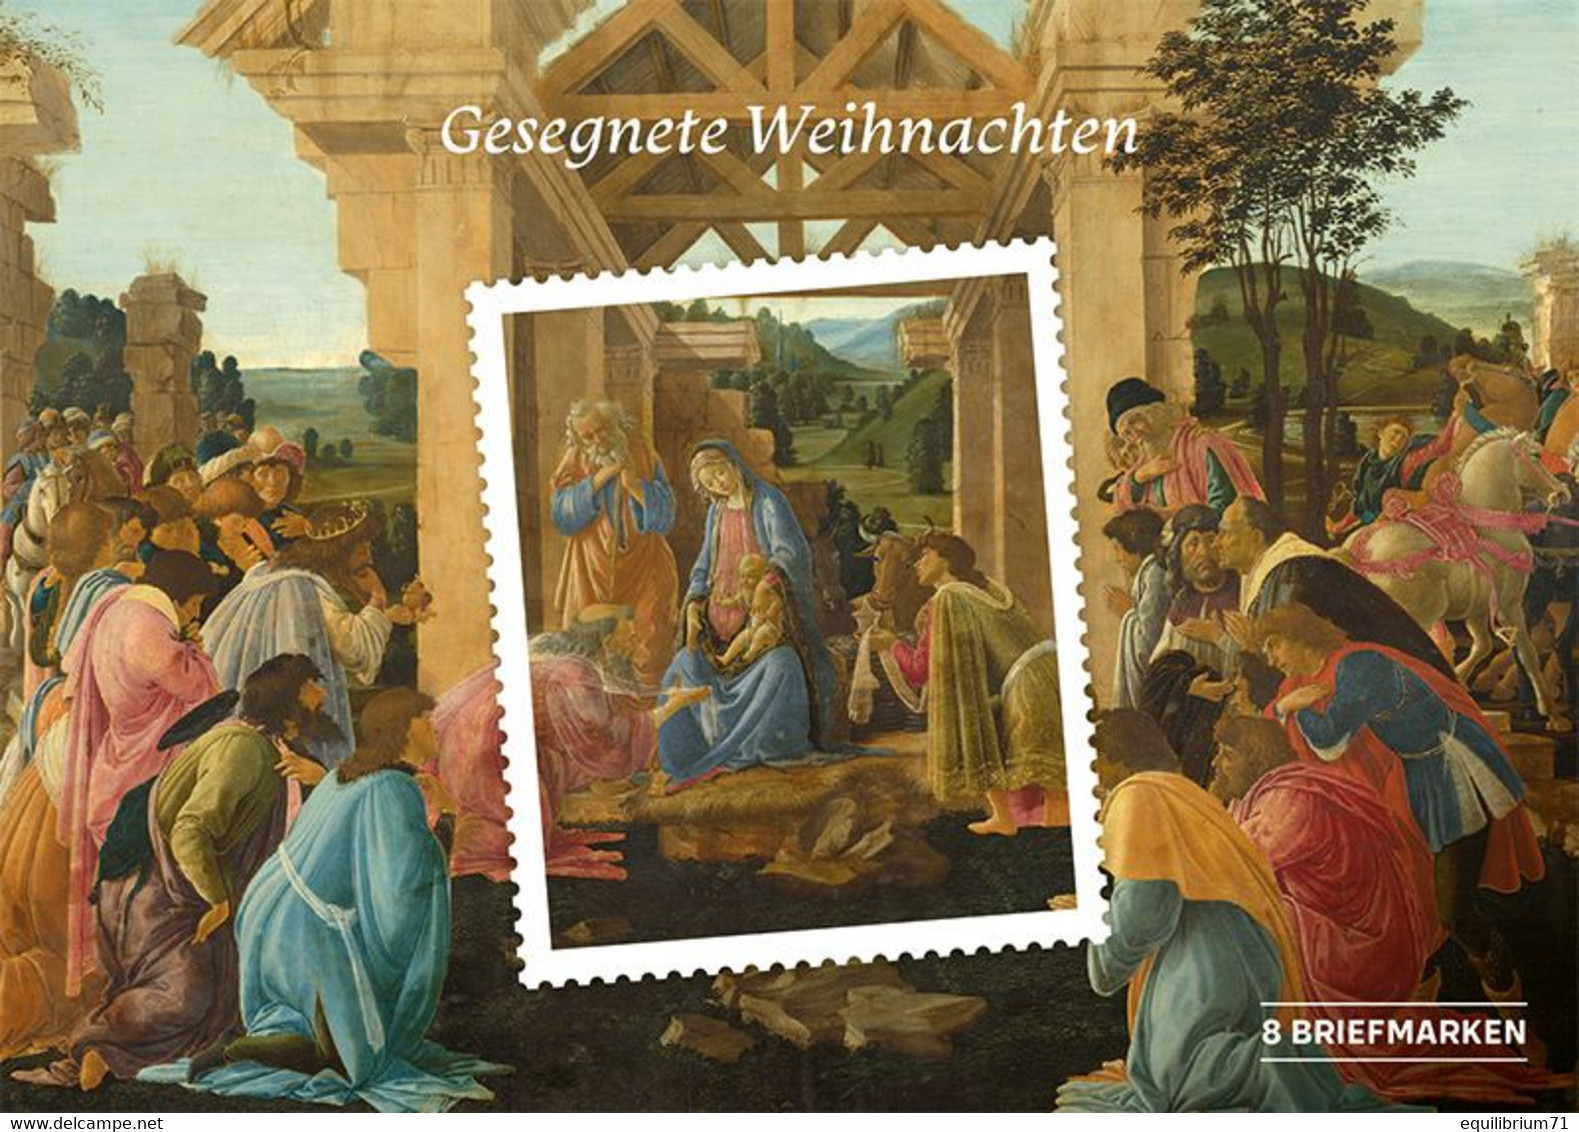 Autriche** - Timbres De Noël / Kerst Postzegels / Weihnachtsmarken / Christmas Stamps - Cuadros